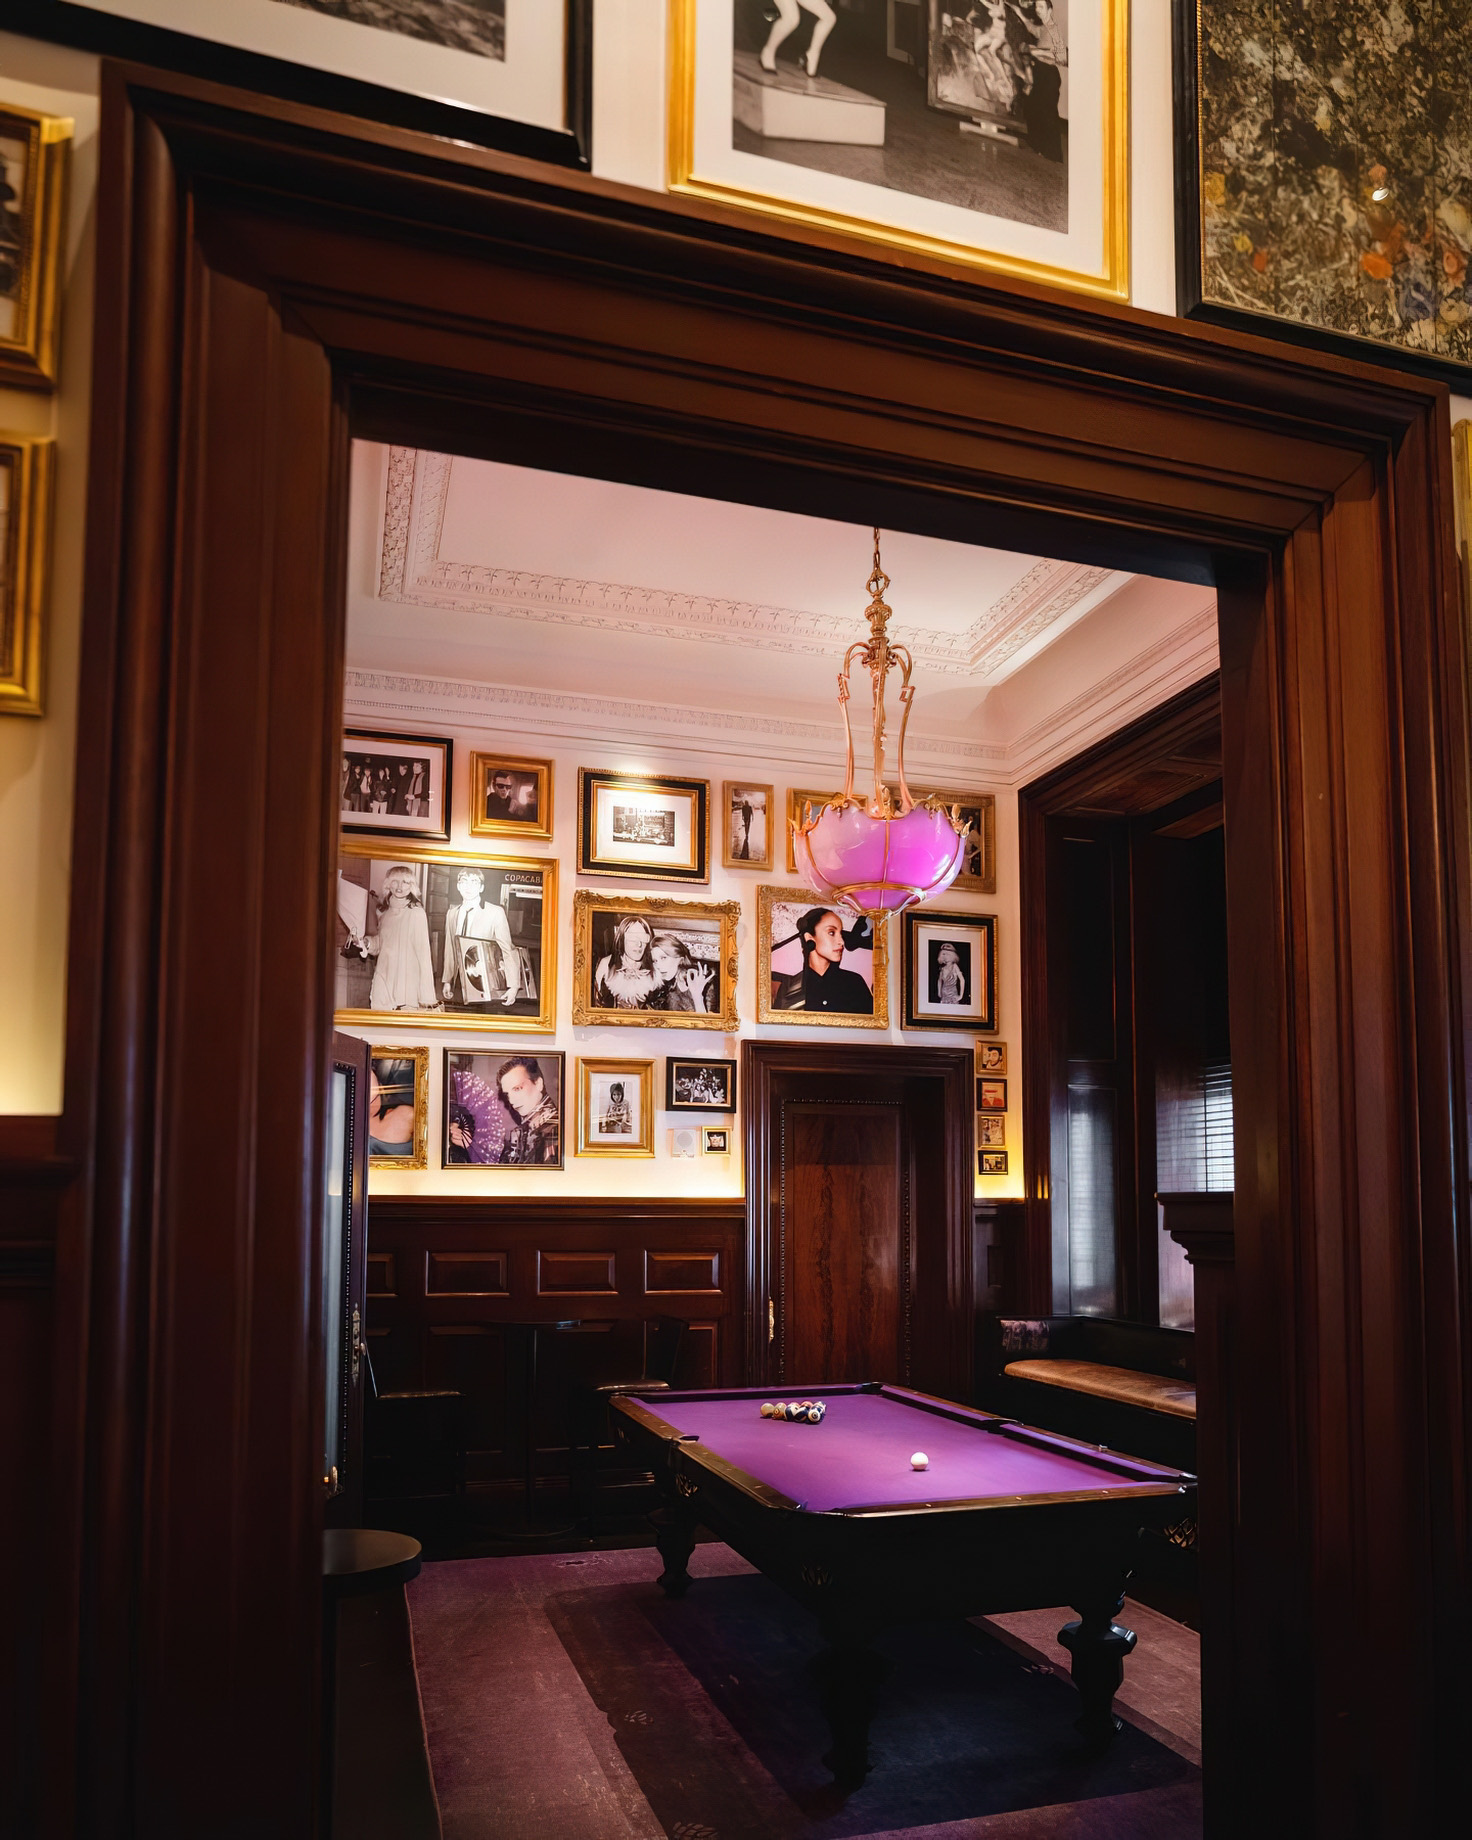 The New York EDITION Hotel – New York, NY, USA – Clocktower Billiard Room Entry